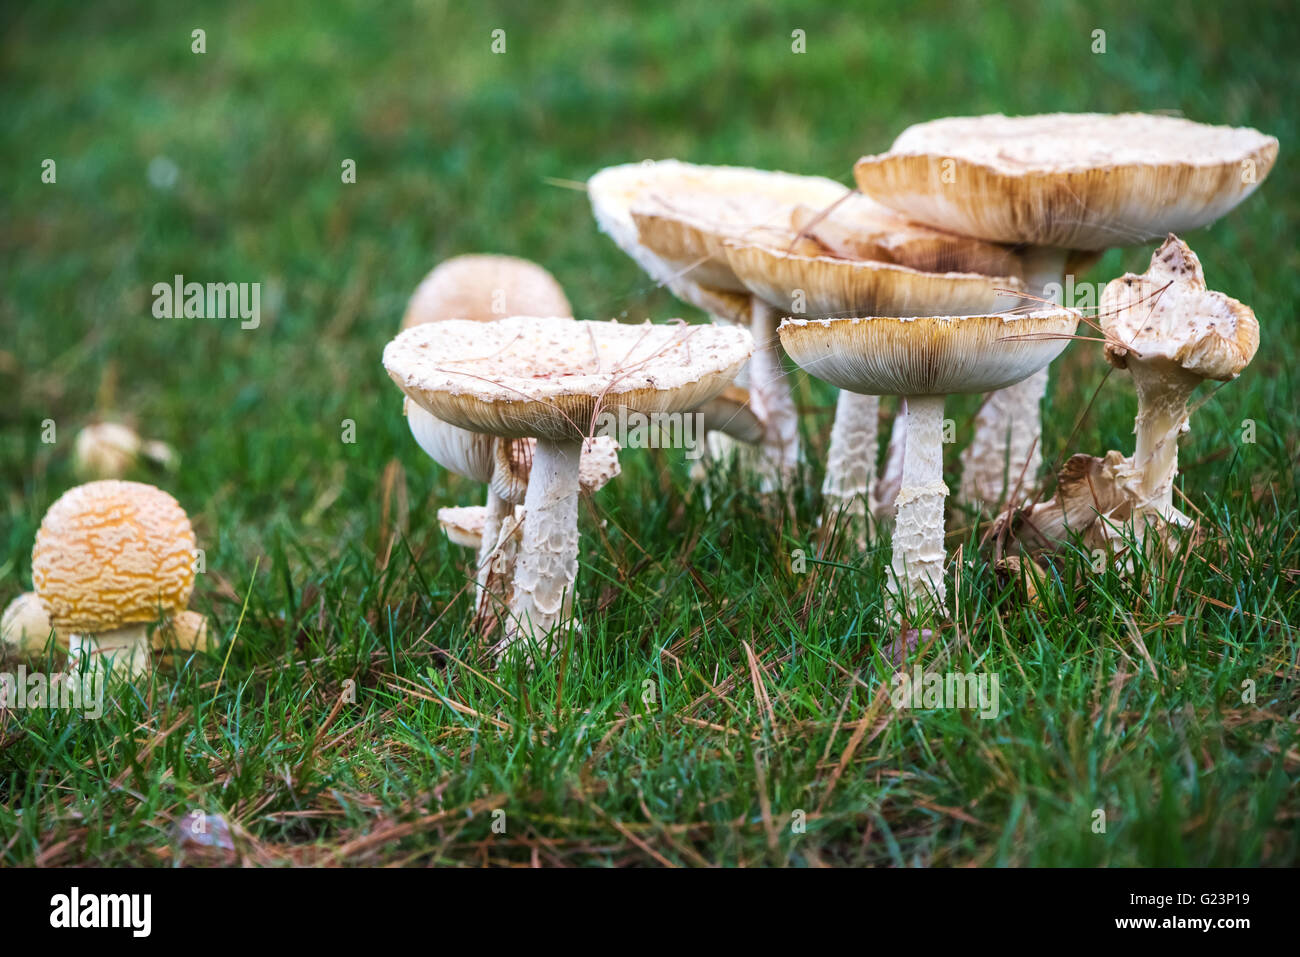 Wild mushroom plants in the wild Stock Photo